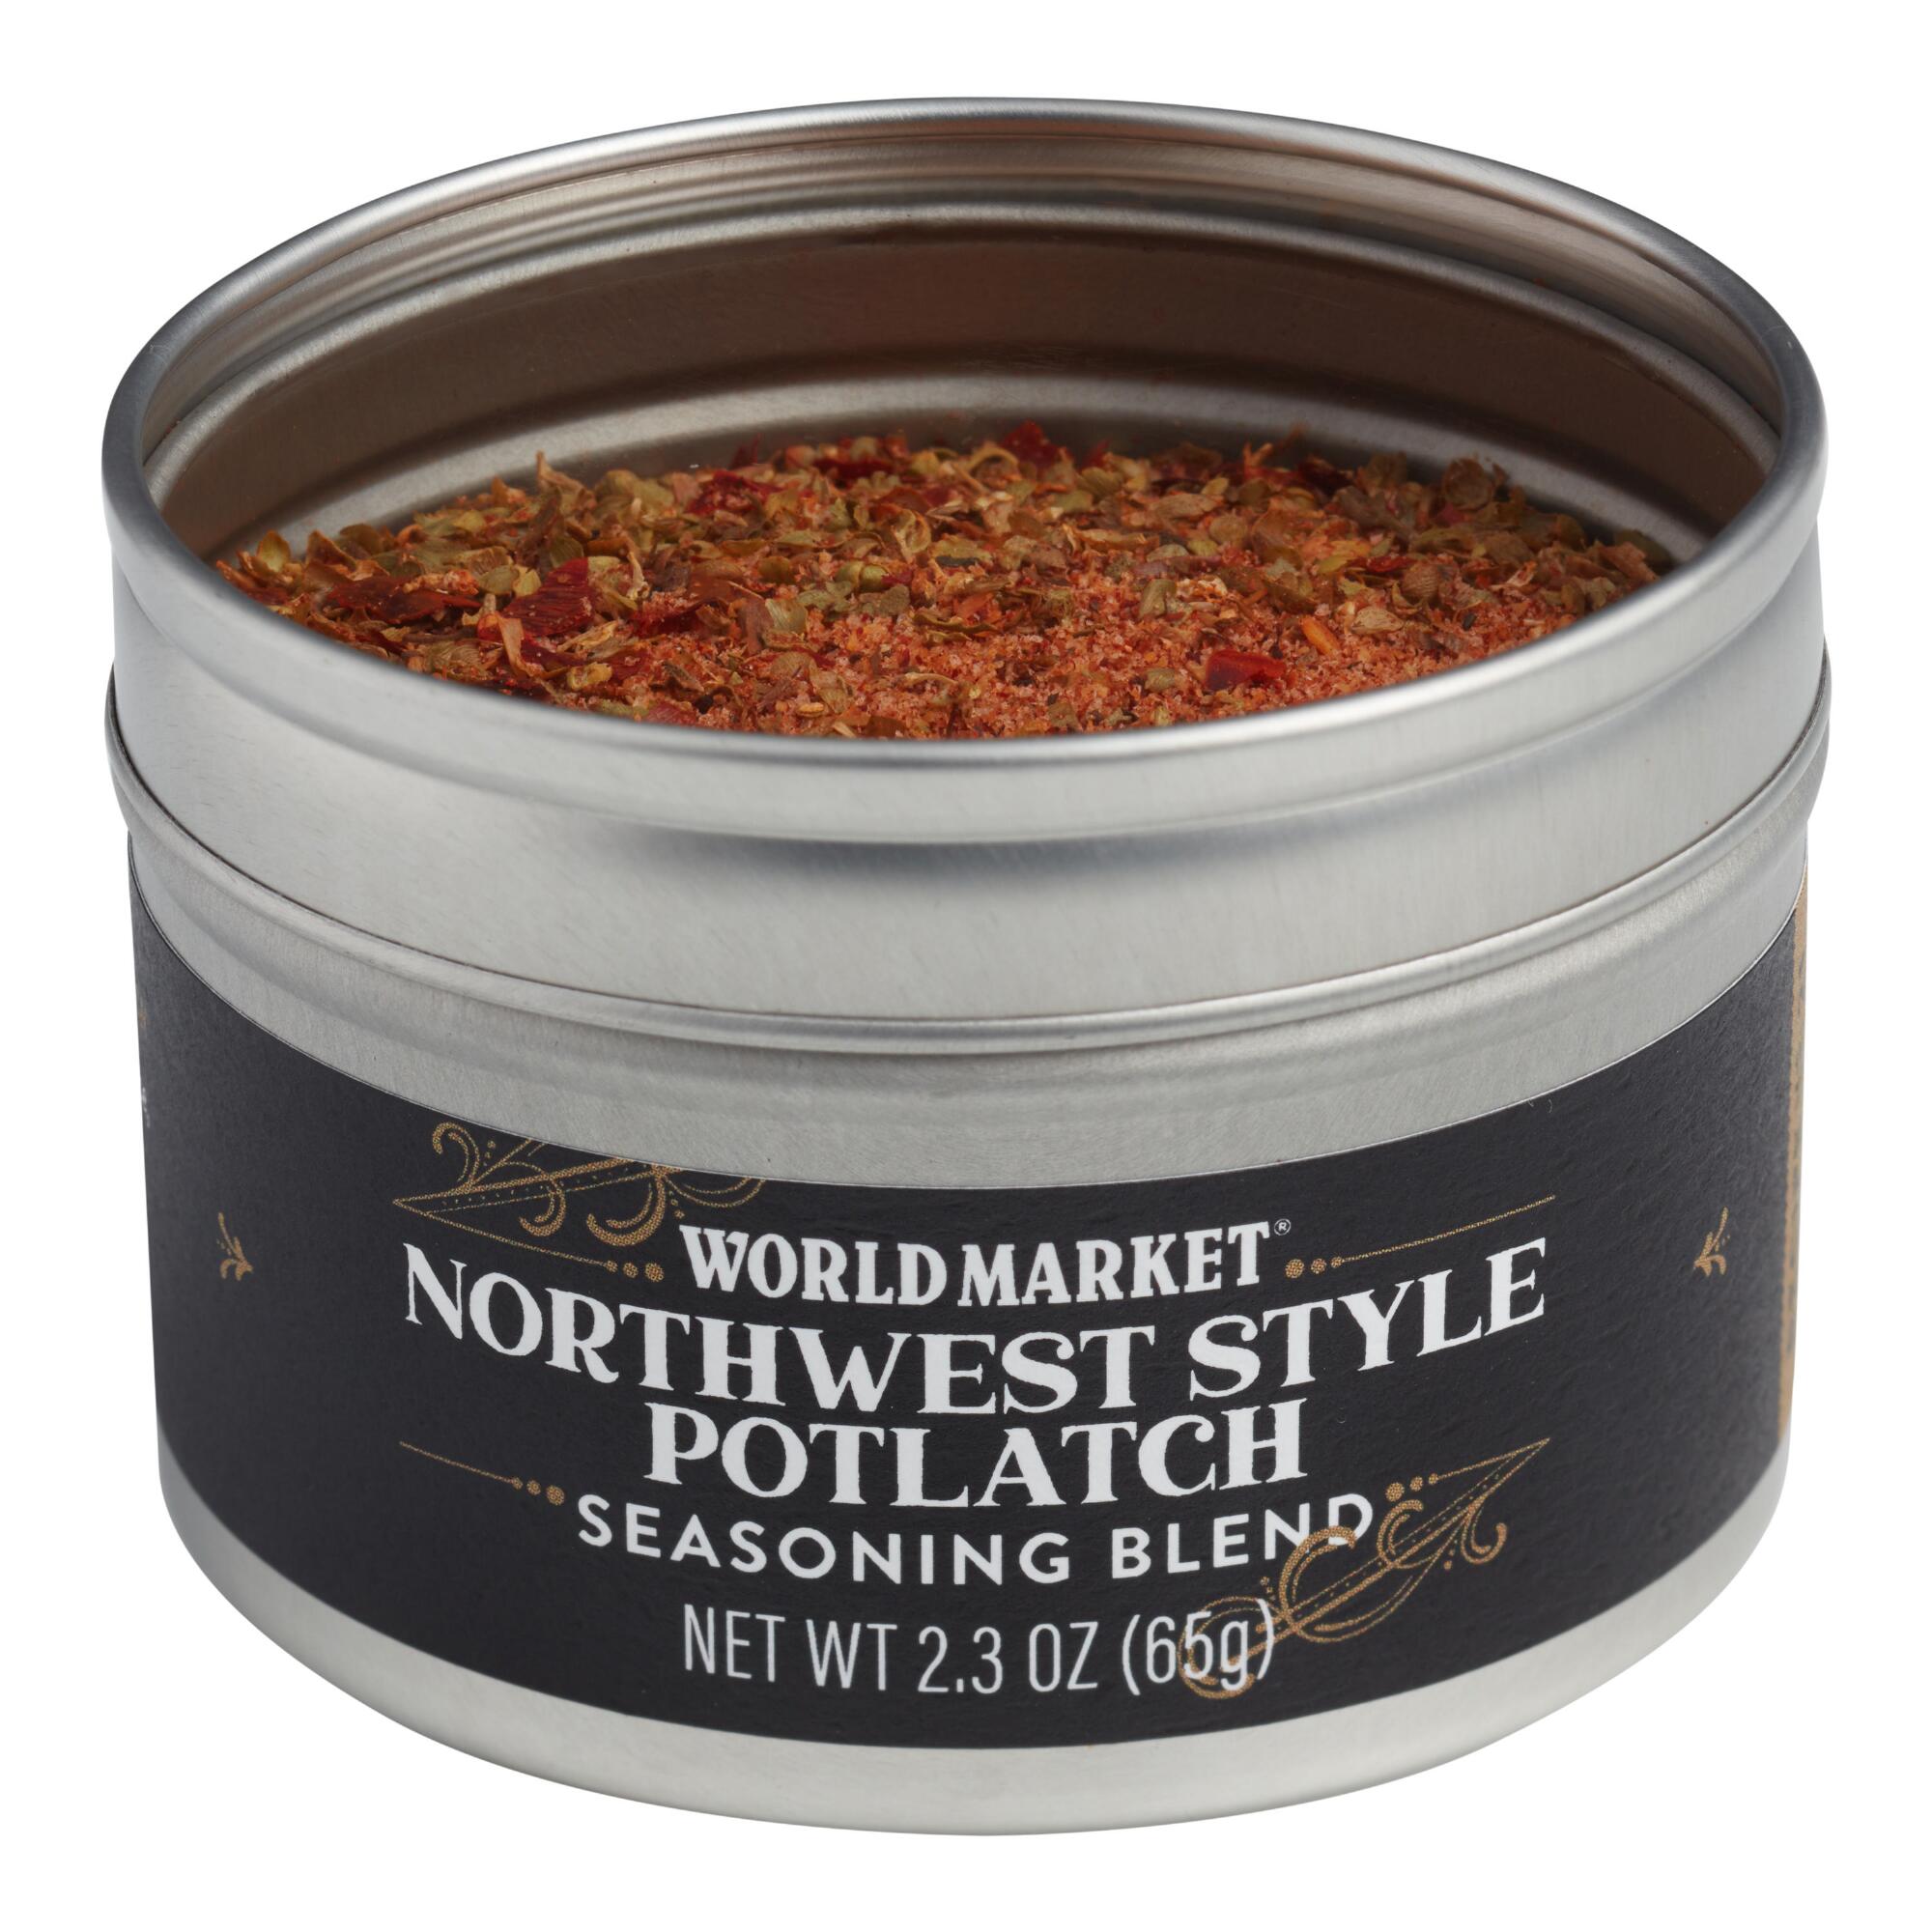 World Market Northwest Style Potlatch Spice Blend by World Market